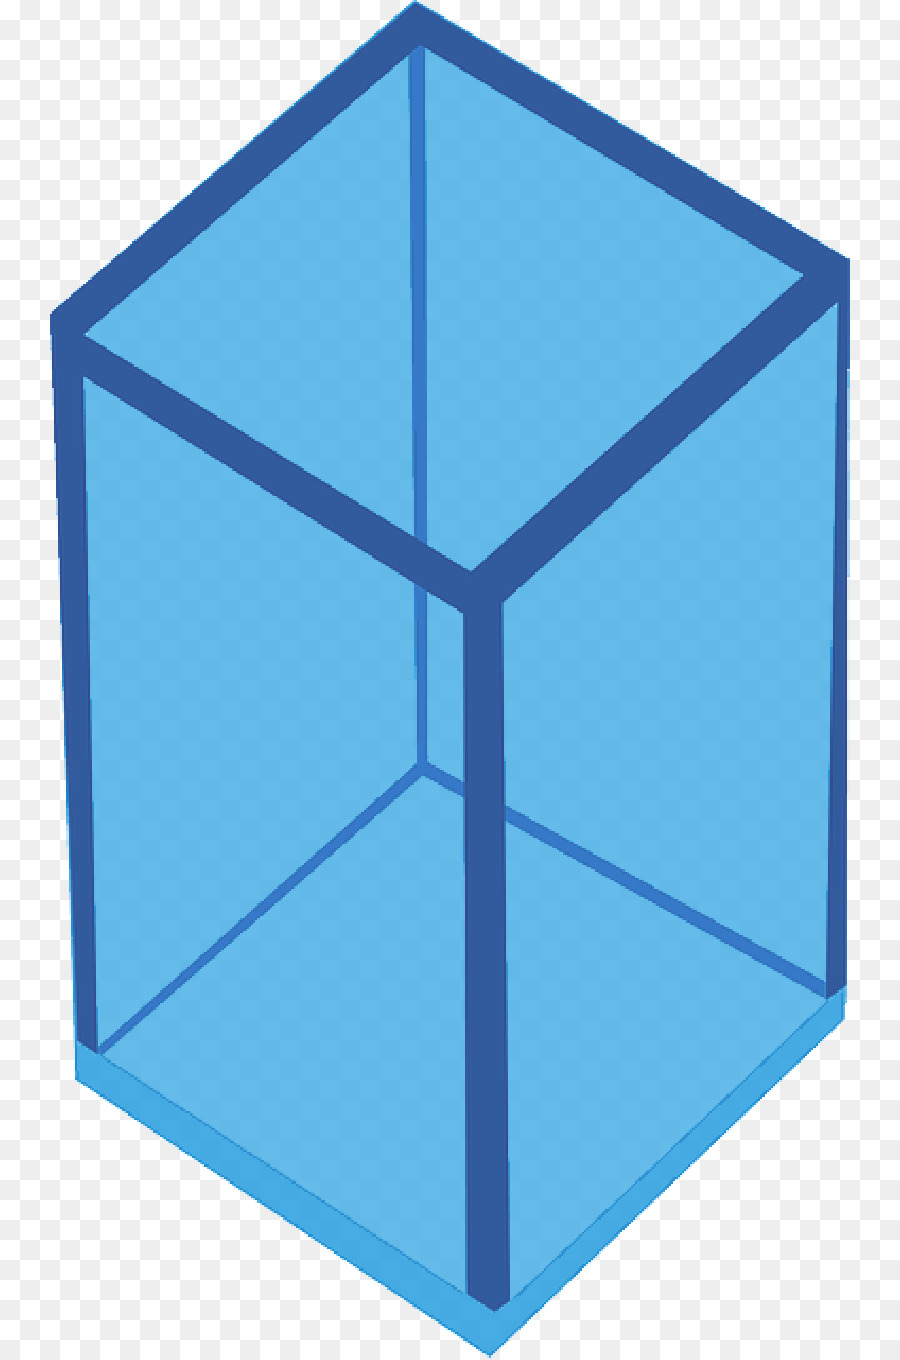 Cube ClipArt Dreidimensionaler Raum Portable Network Graphics Skalierbare Vektorgrafiken - Rechteck